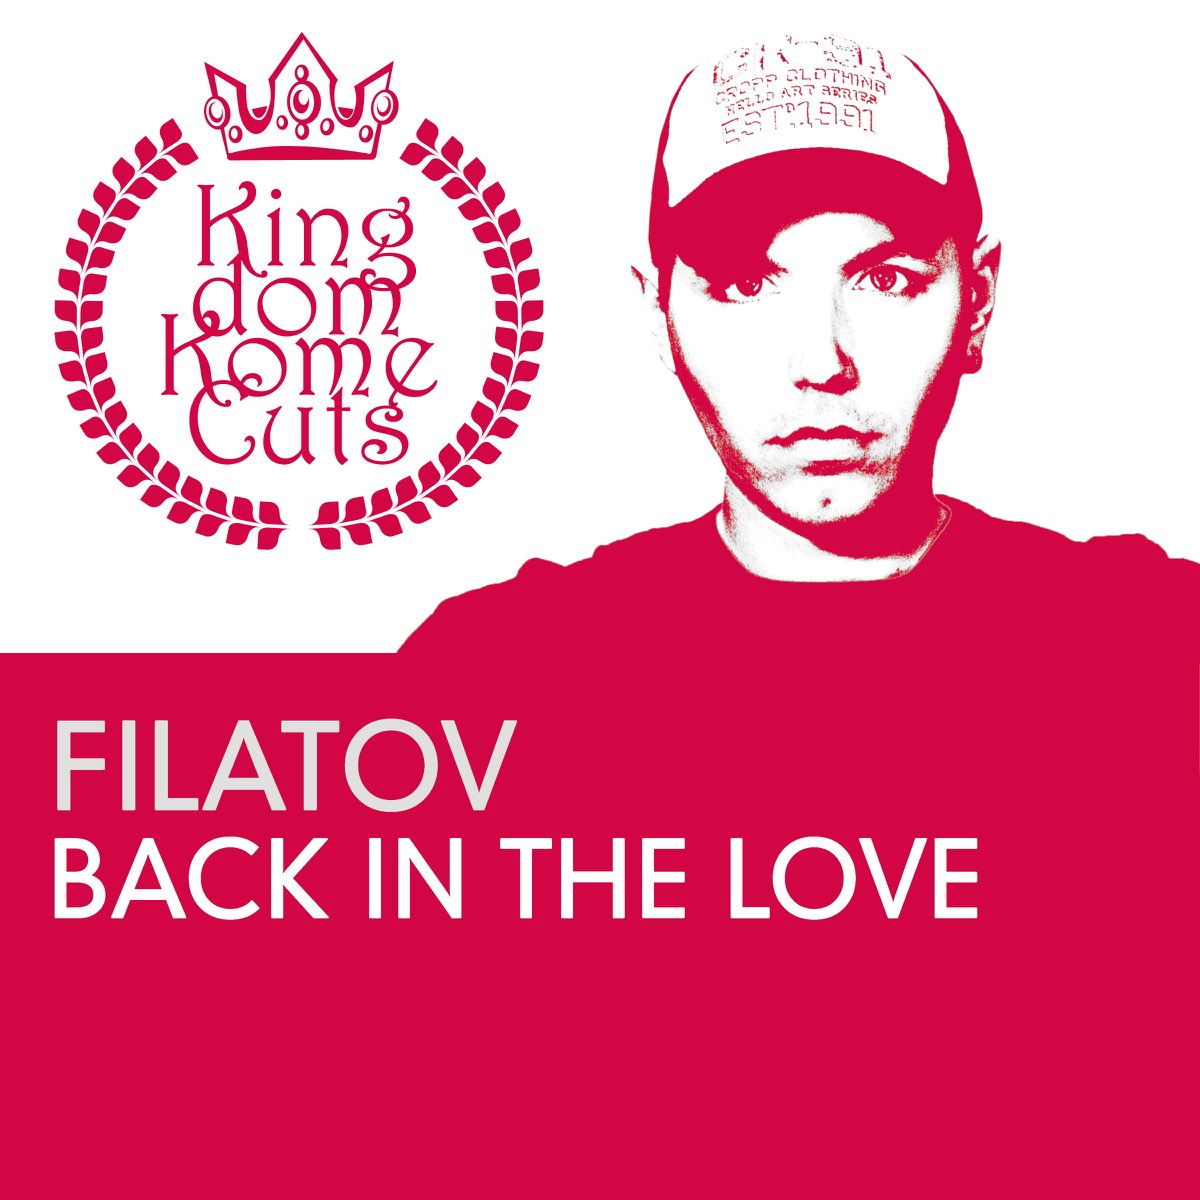 Filatov. Filatov__Artemka. Filatov and Karas лого. Away filatov